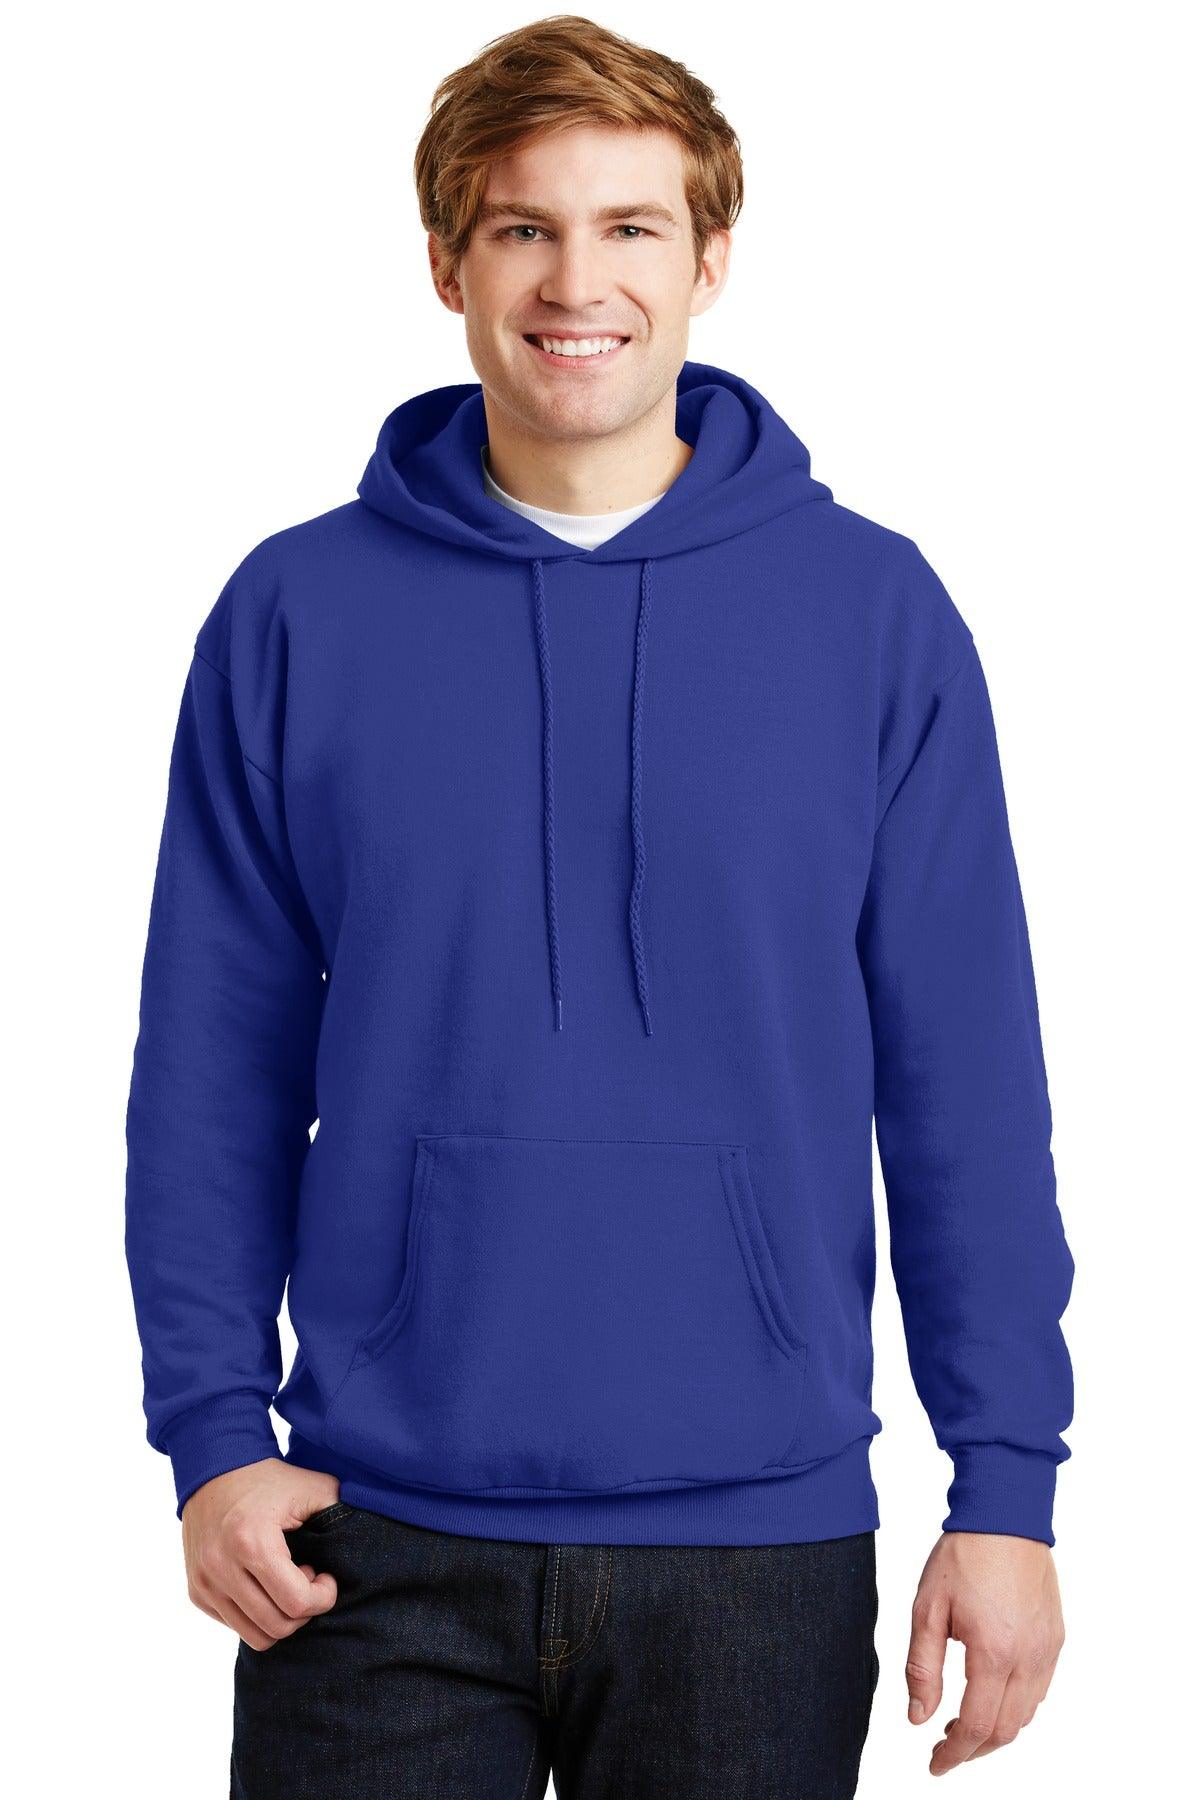 Hanes EcoSmart - Pullover Hooded Sweatshirt. P170 - Dresses Max